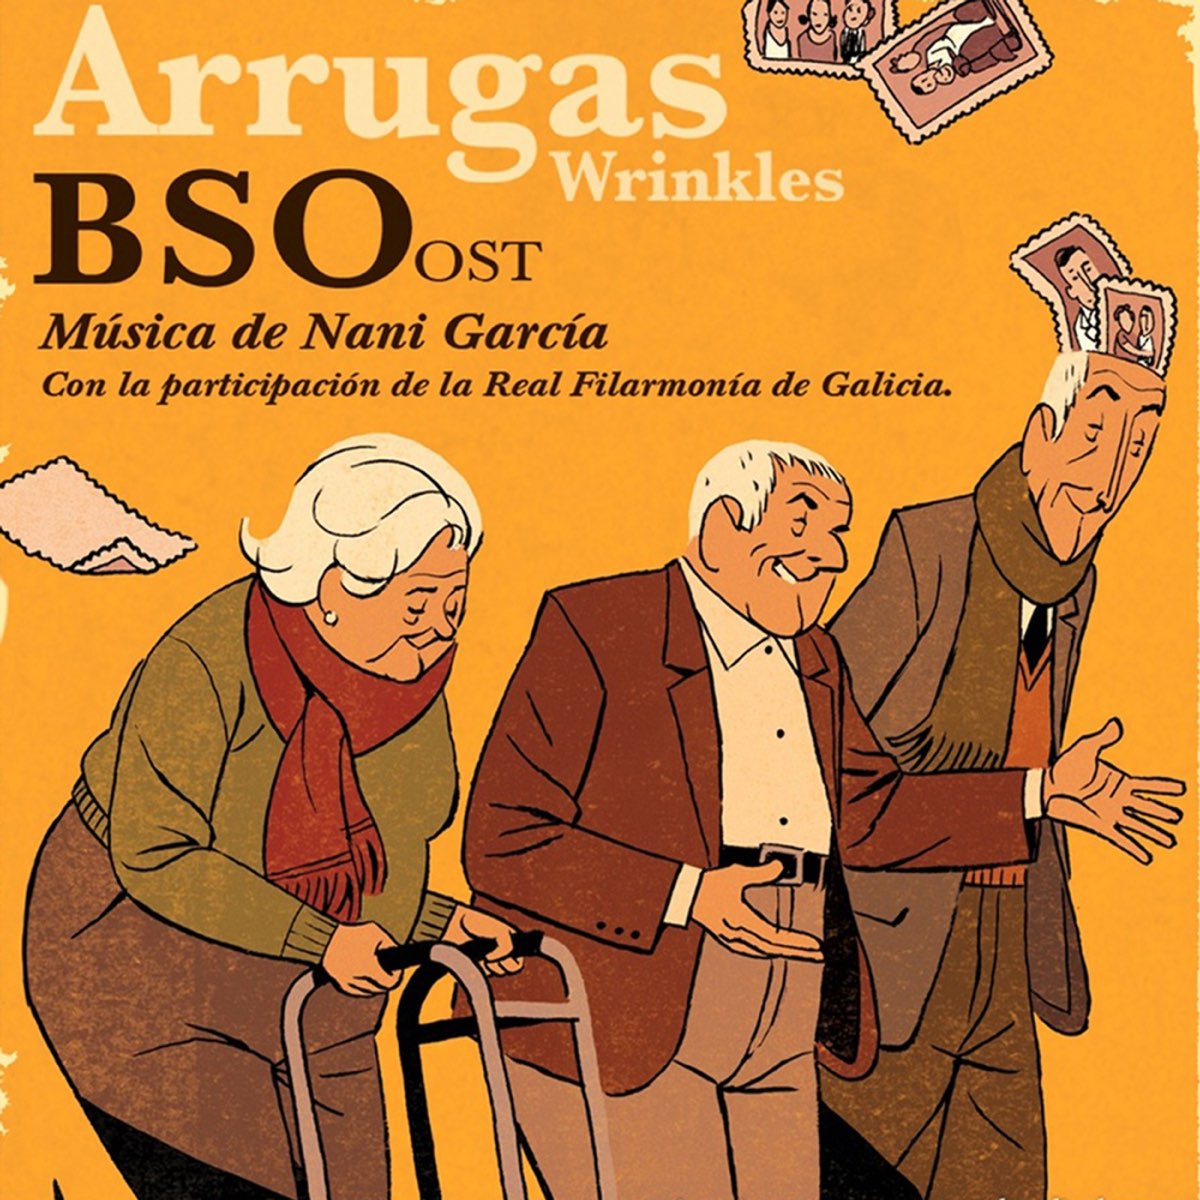 Arrugas (Wrinkles) [Banda Sonora Original] [Soundtrack from the Motion  Picture] de l'artista Nani García a l'Apple Music